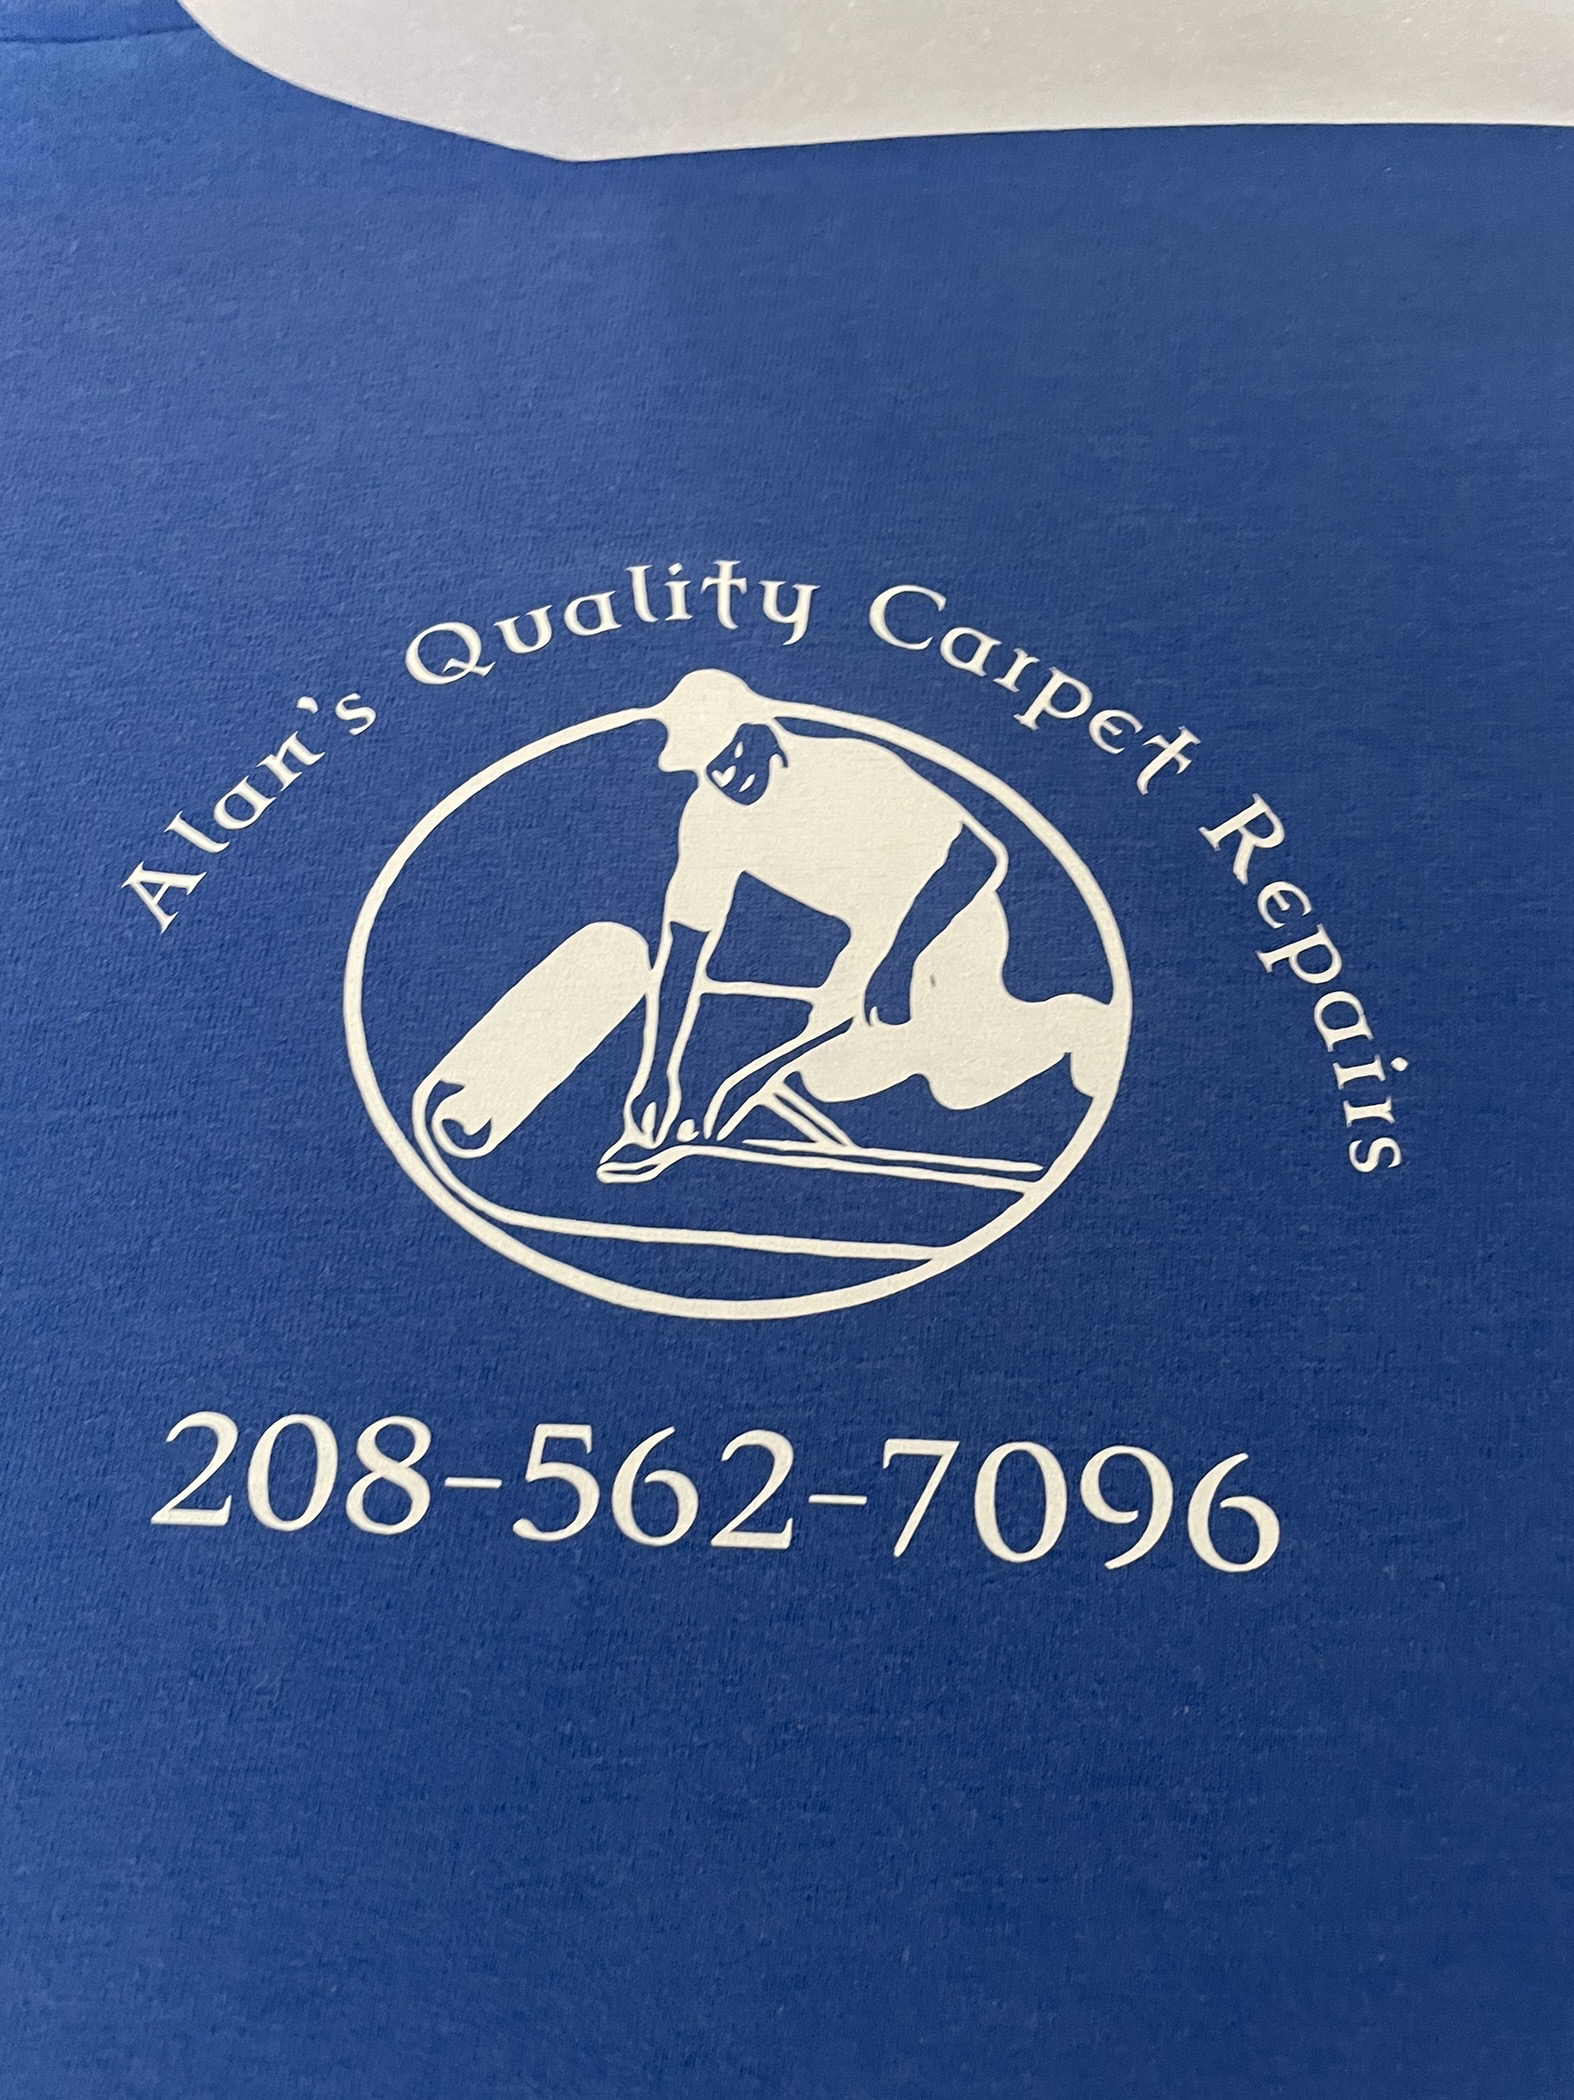 Alan's Quality Carpet Repairs Logo